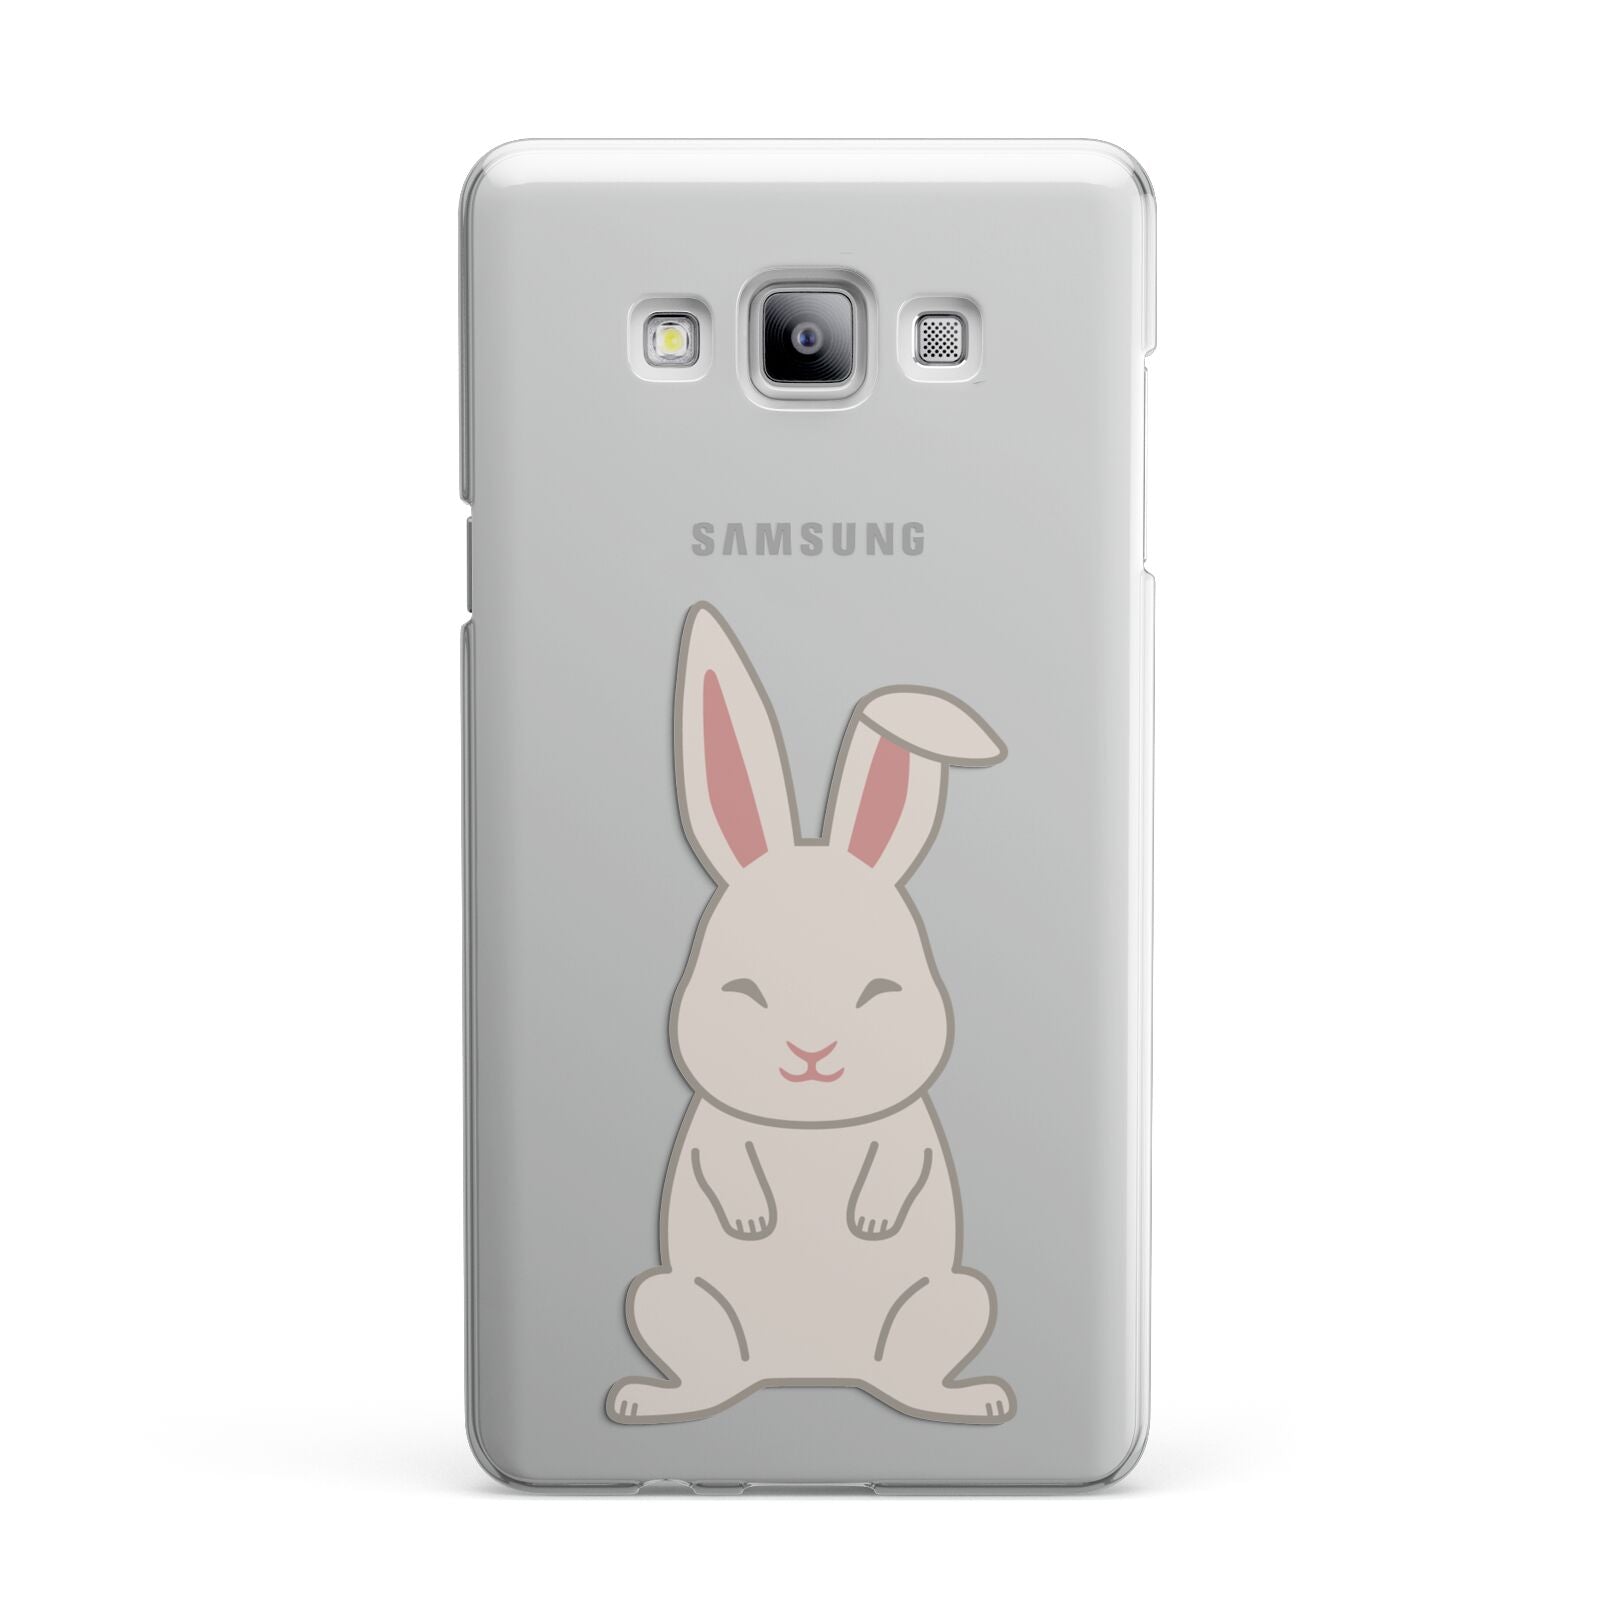 Bunny Samsung Galaxy A7 2015 Case